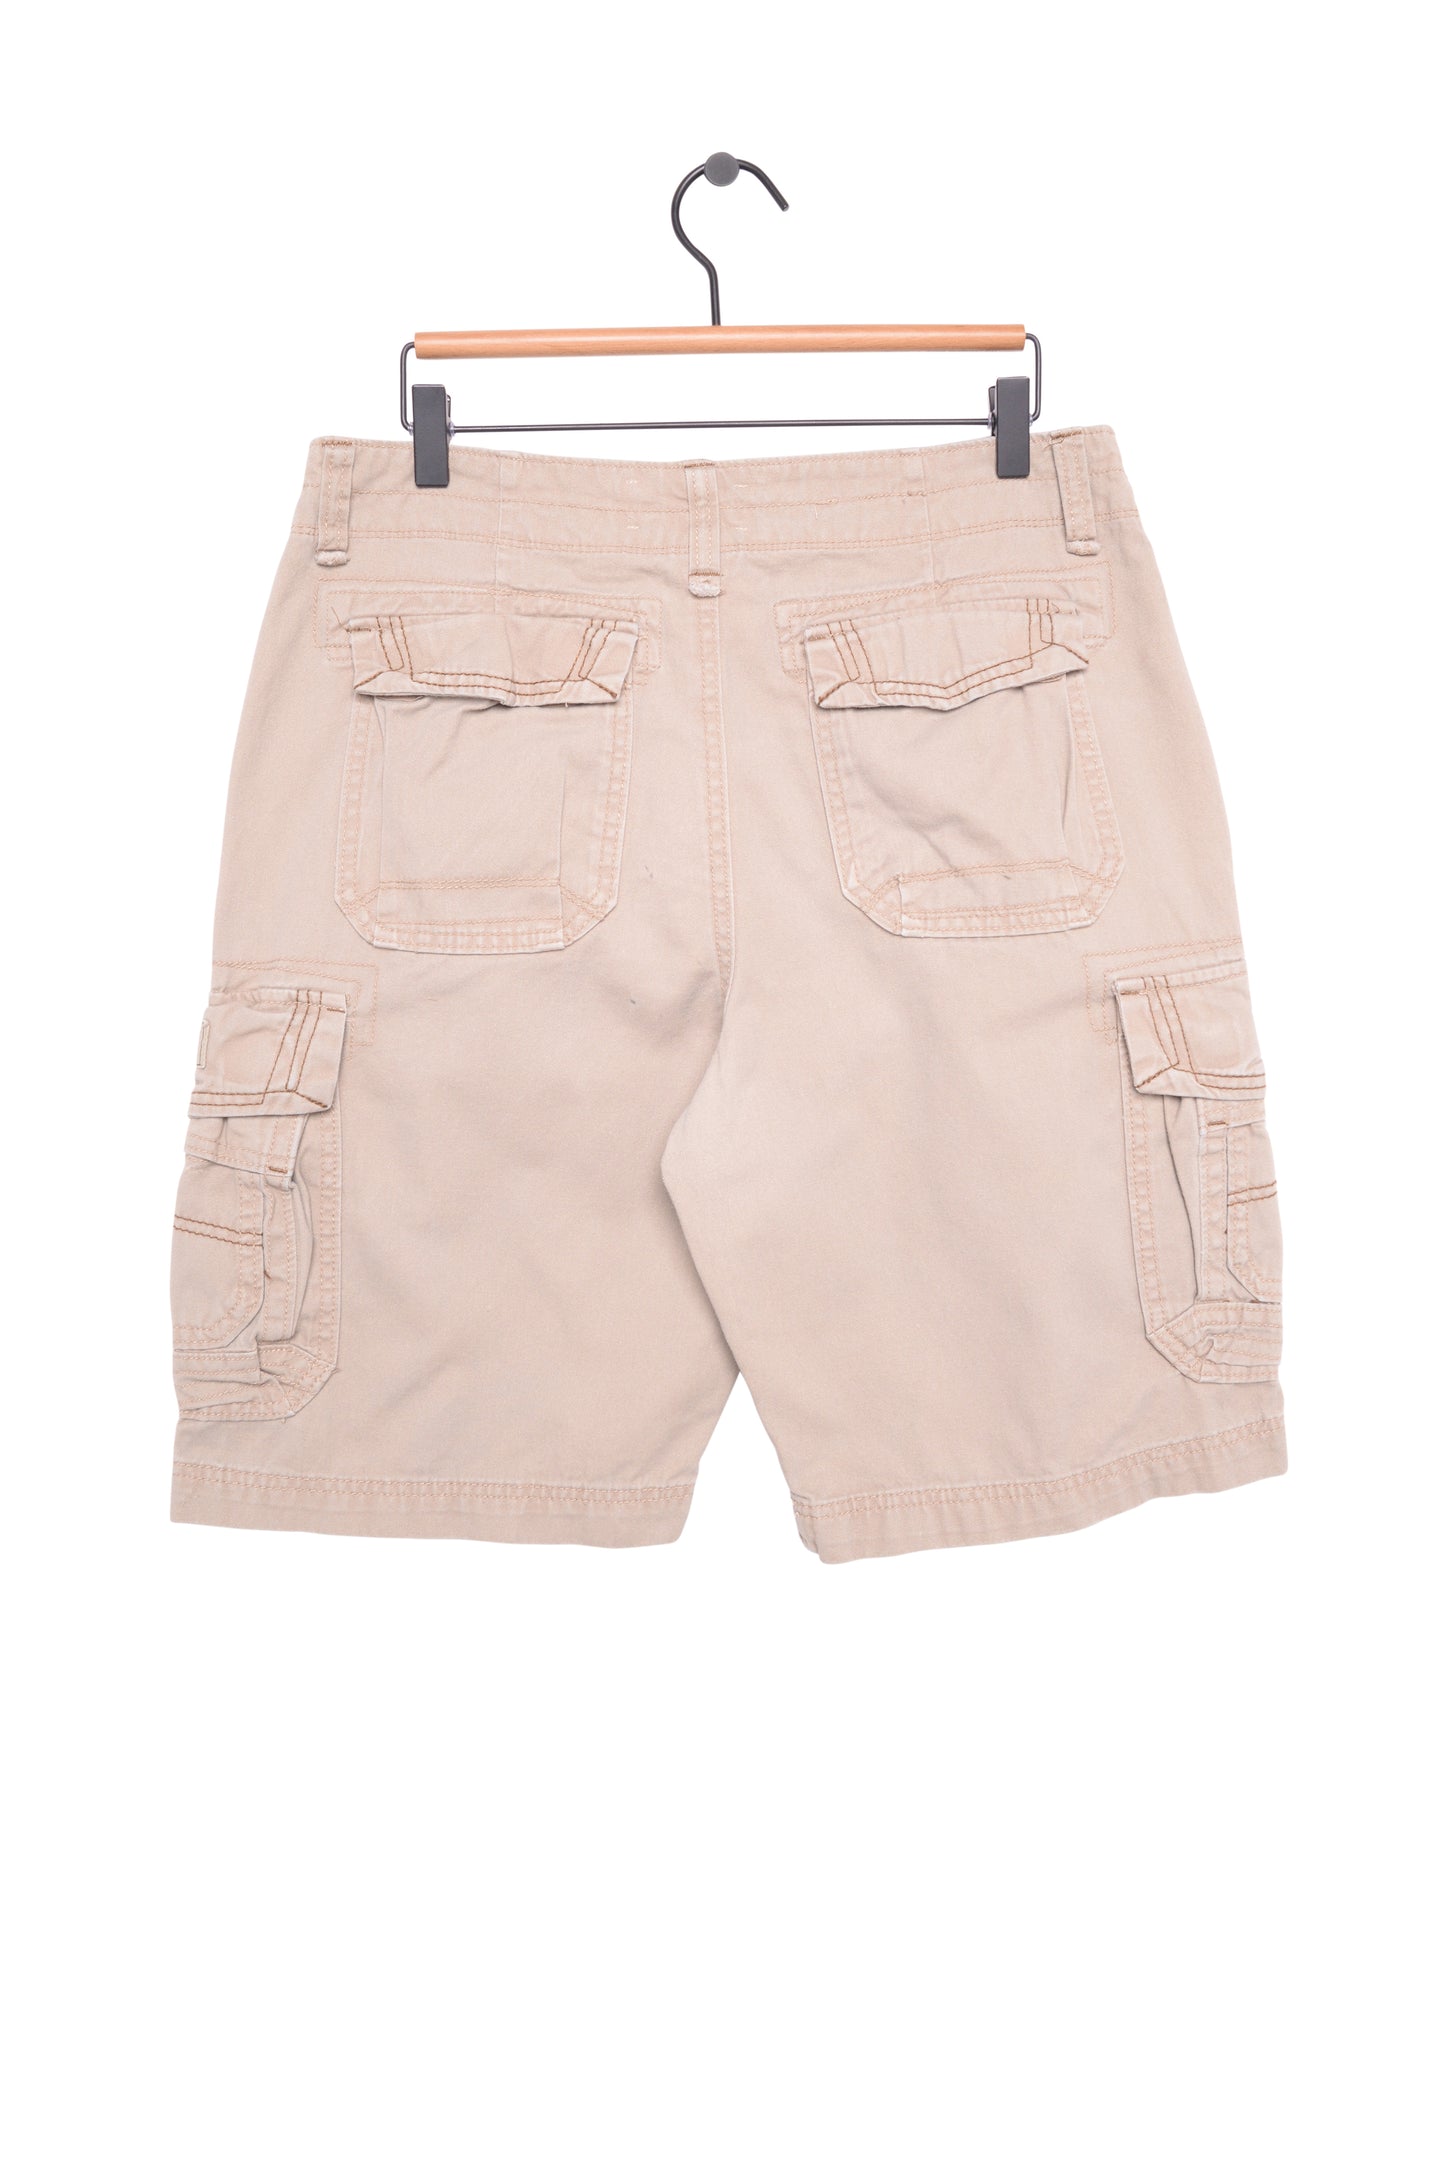 1980s Cargo Shorts